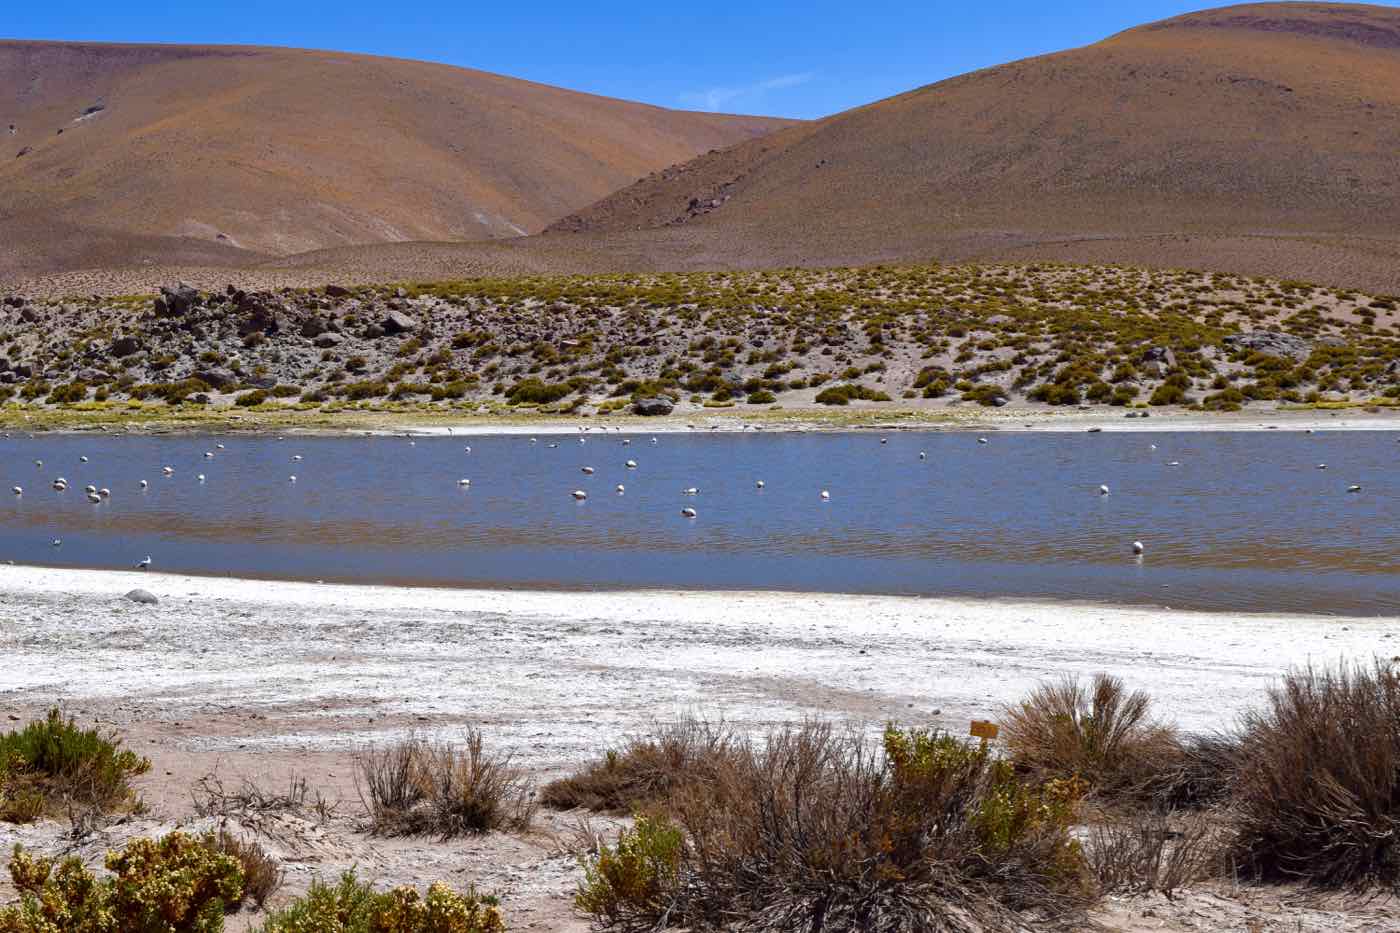 Lagoon with flamingos on the way from El Tatio Geysers to San Pedro De Atacama